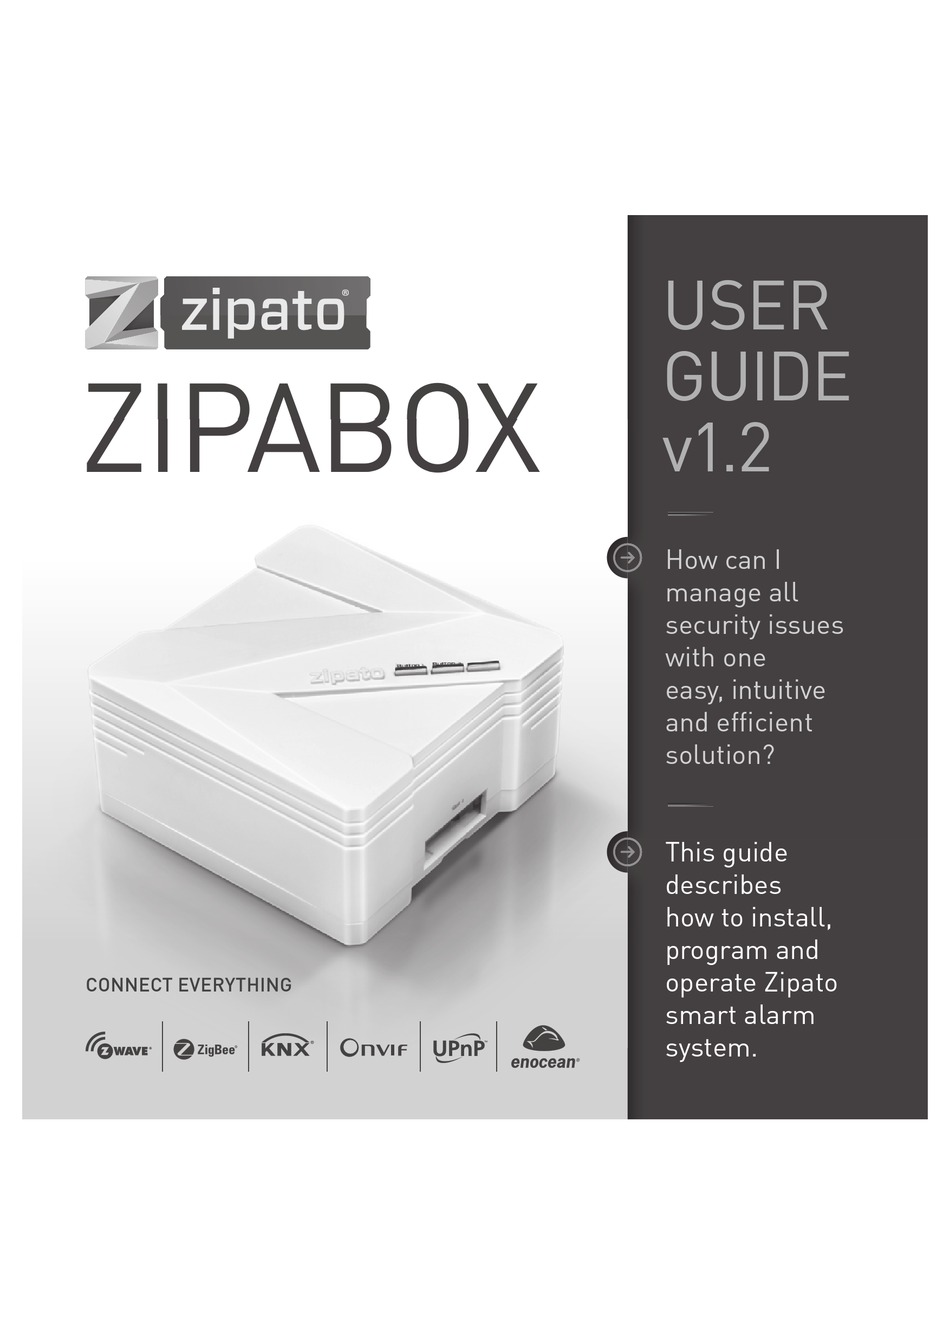 ZIPATO ZIPABOX QUICK INSTALLATION MANUAL Pdf Download | ManualsLib